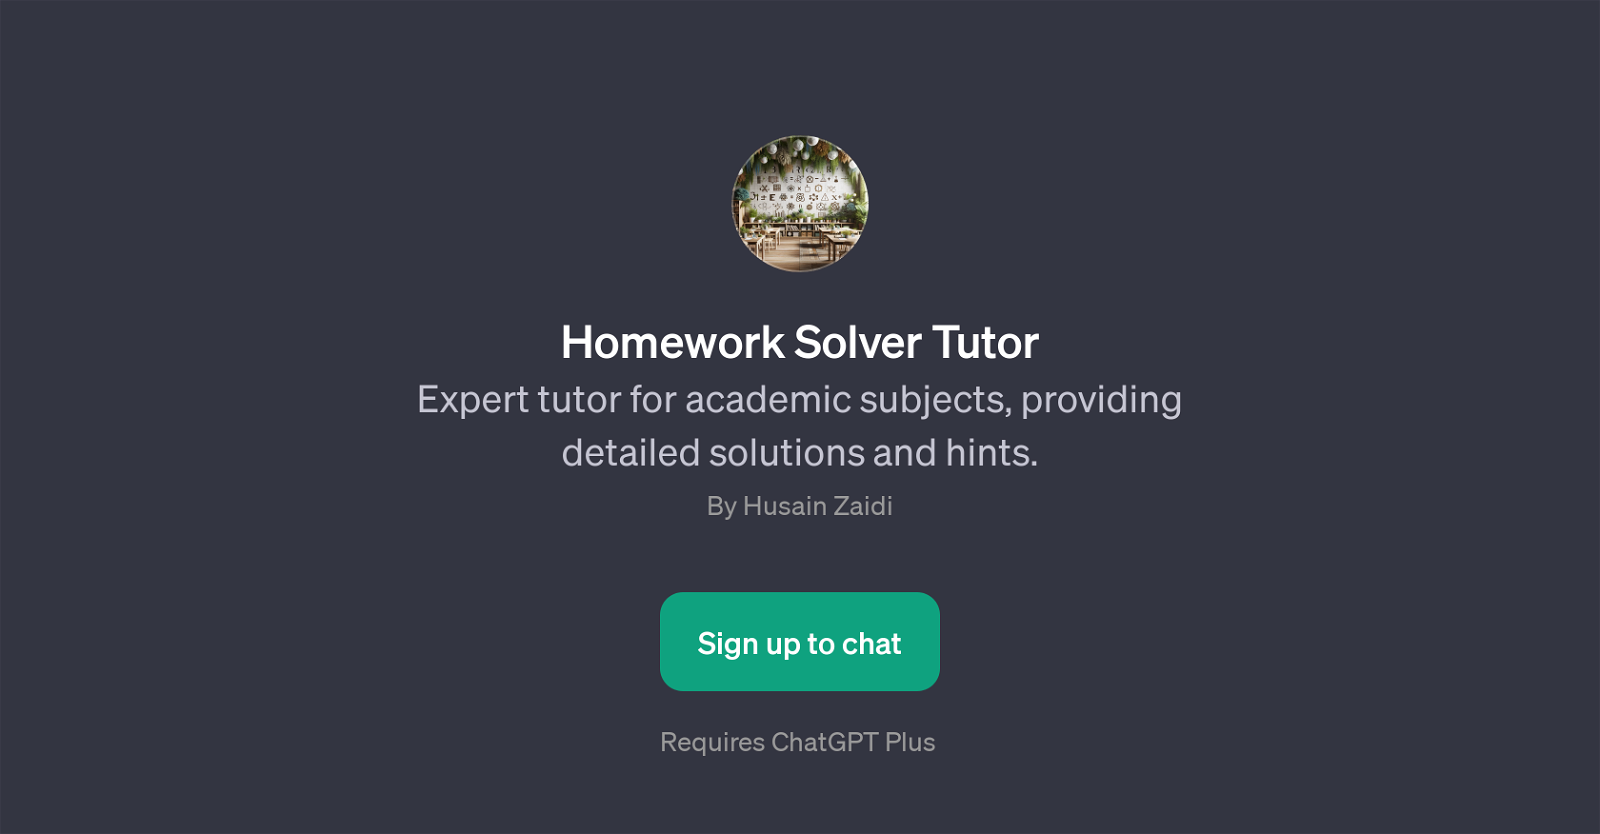 Homework Solver Tutor website